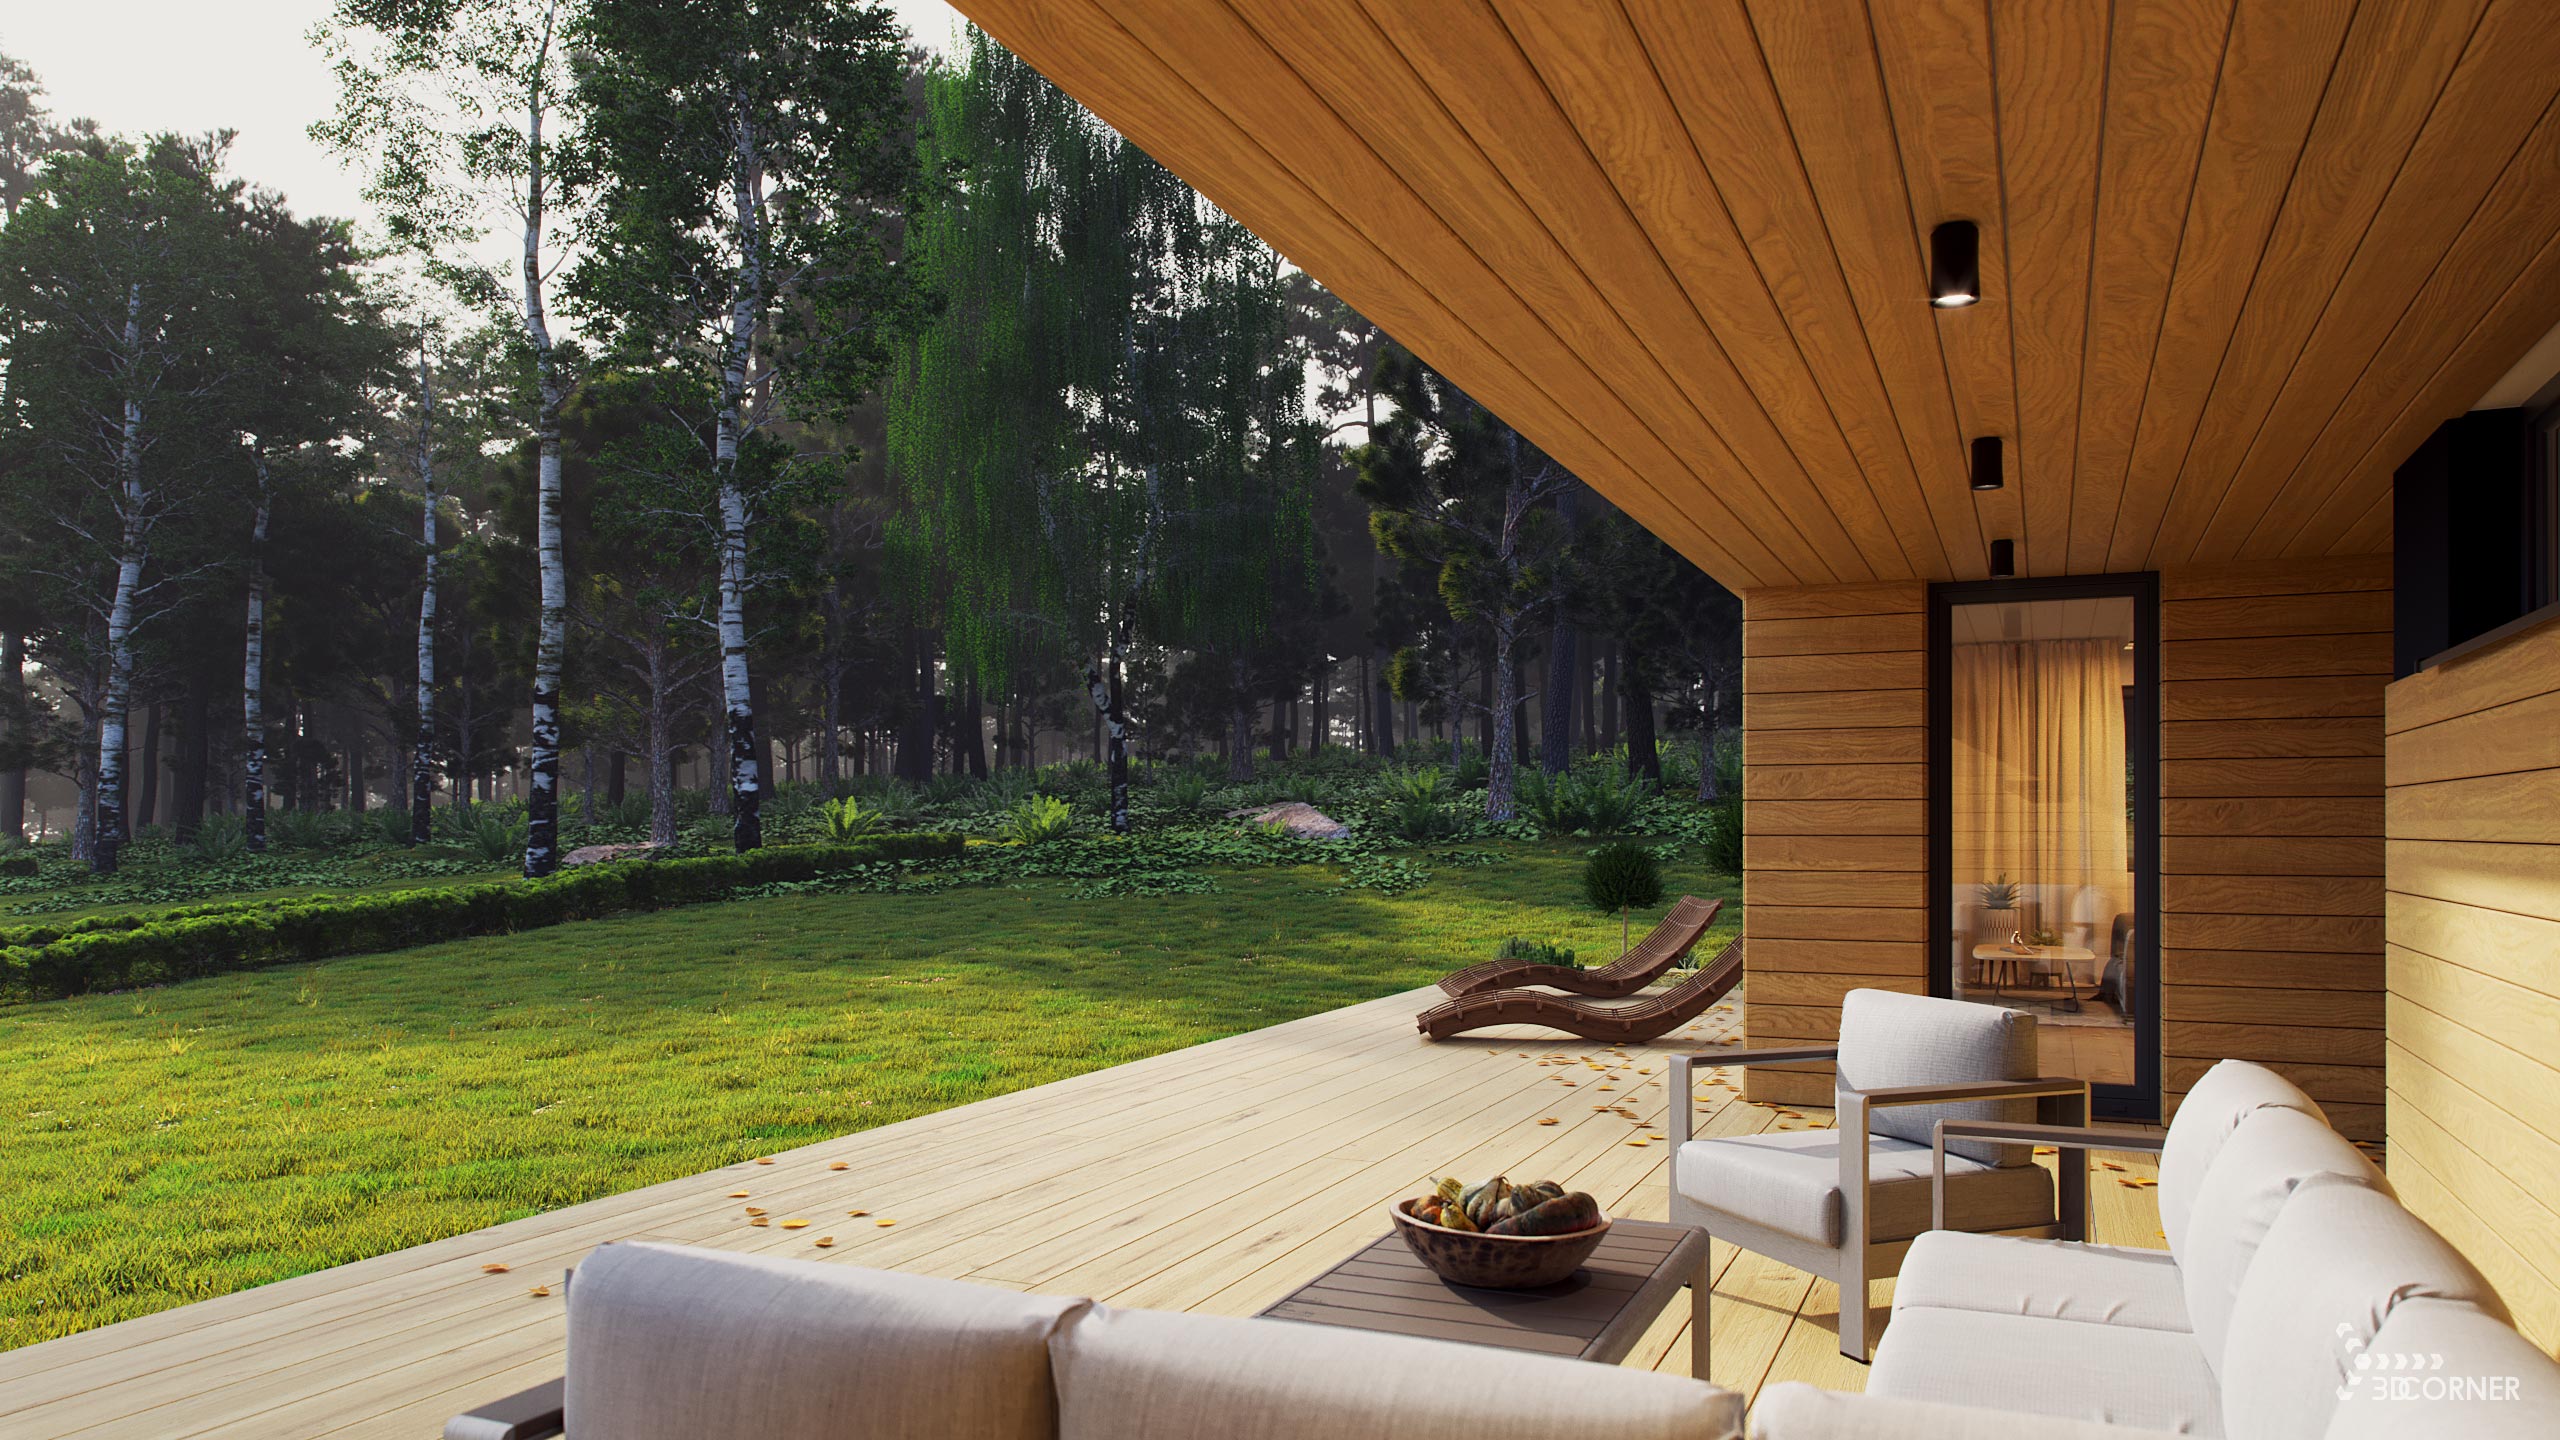 visualization exterior photorealistic modern house terrace 3dcorner